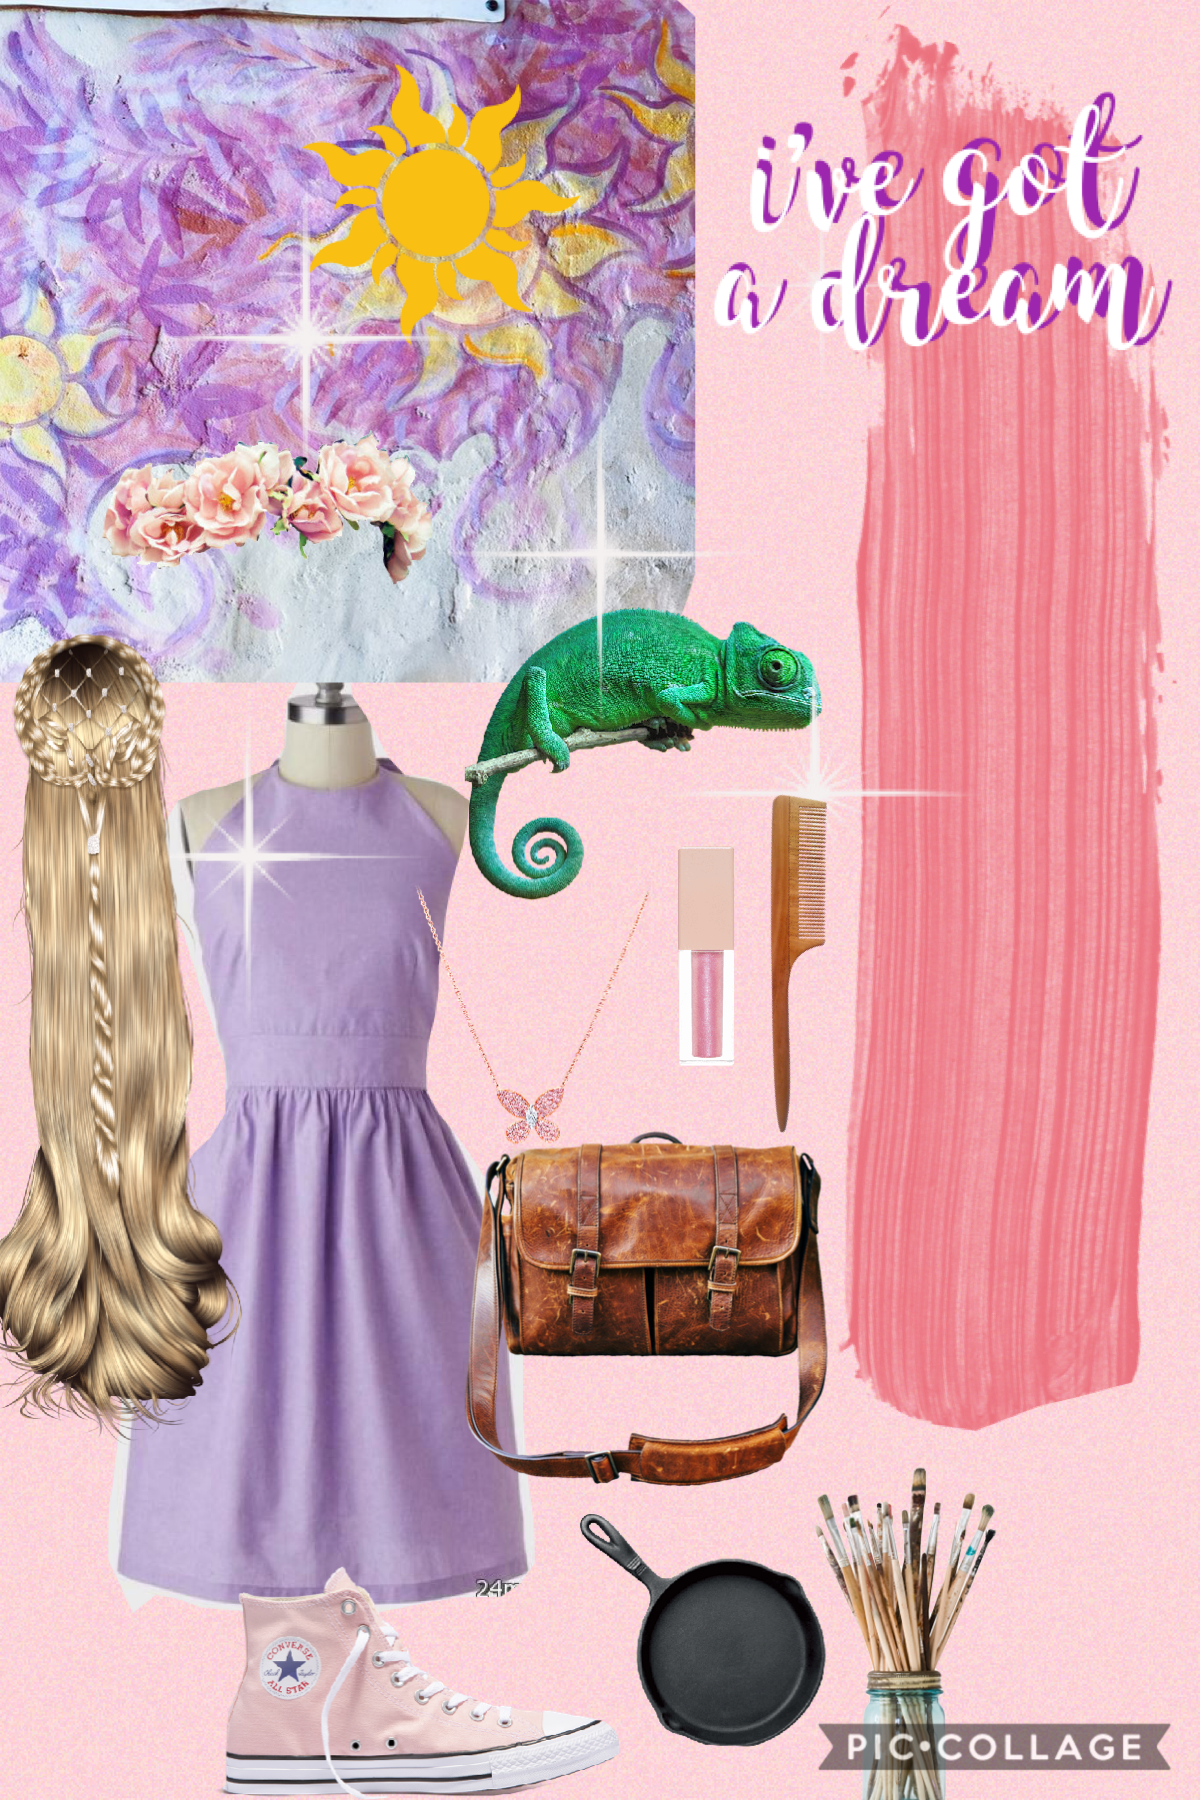 princess rapunzel 💜

#tangled #rapunzel #purple #chameleon #frying pan #paint #art #disney #princess #flynnrider #sun #lantern #dream #hair #sneaker #pink